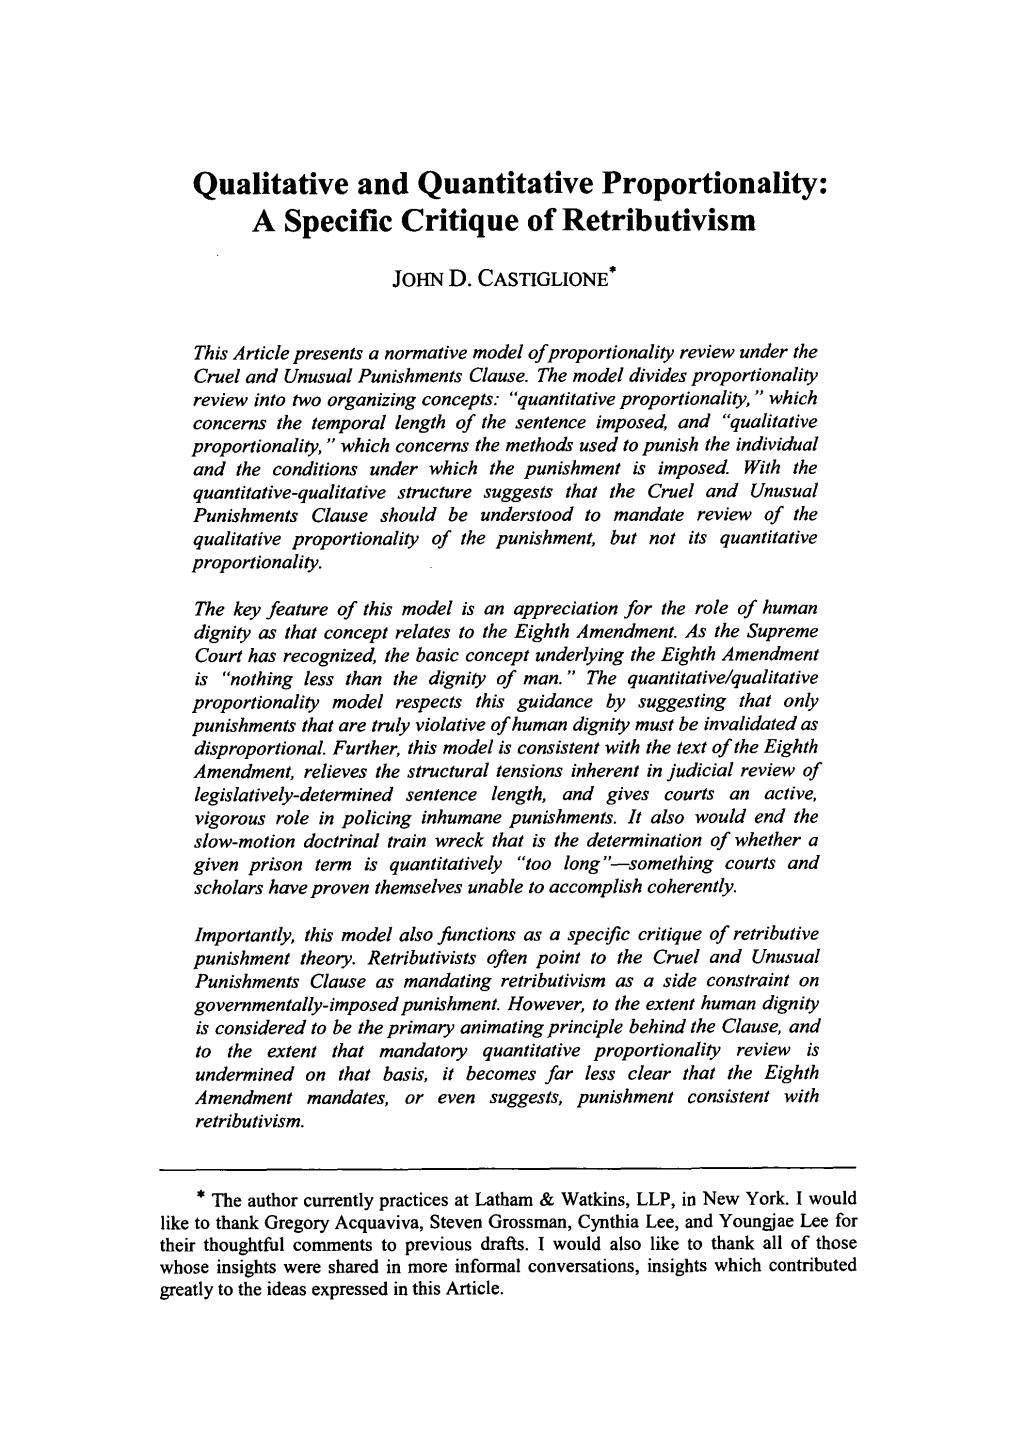 Qualitative and Quantitative Proportionality: a Specific Critique of Retributivism